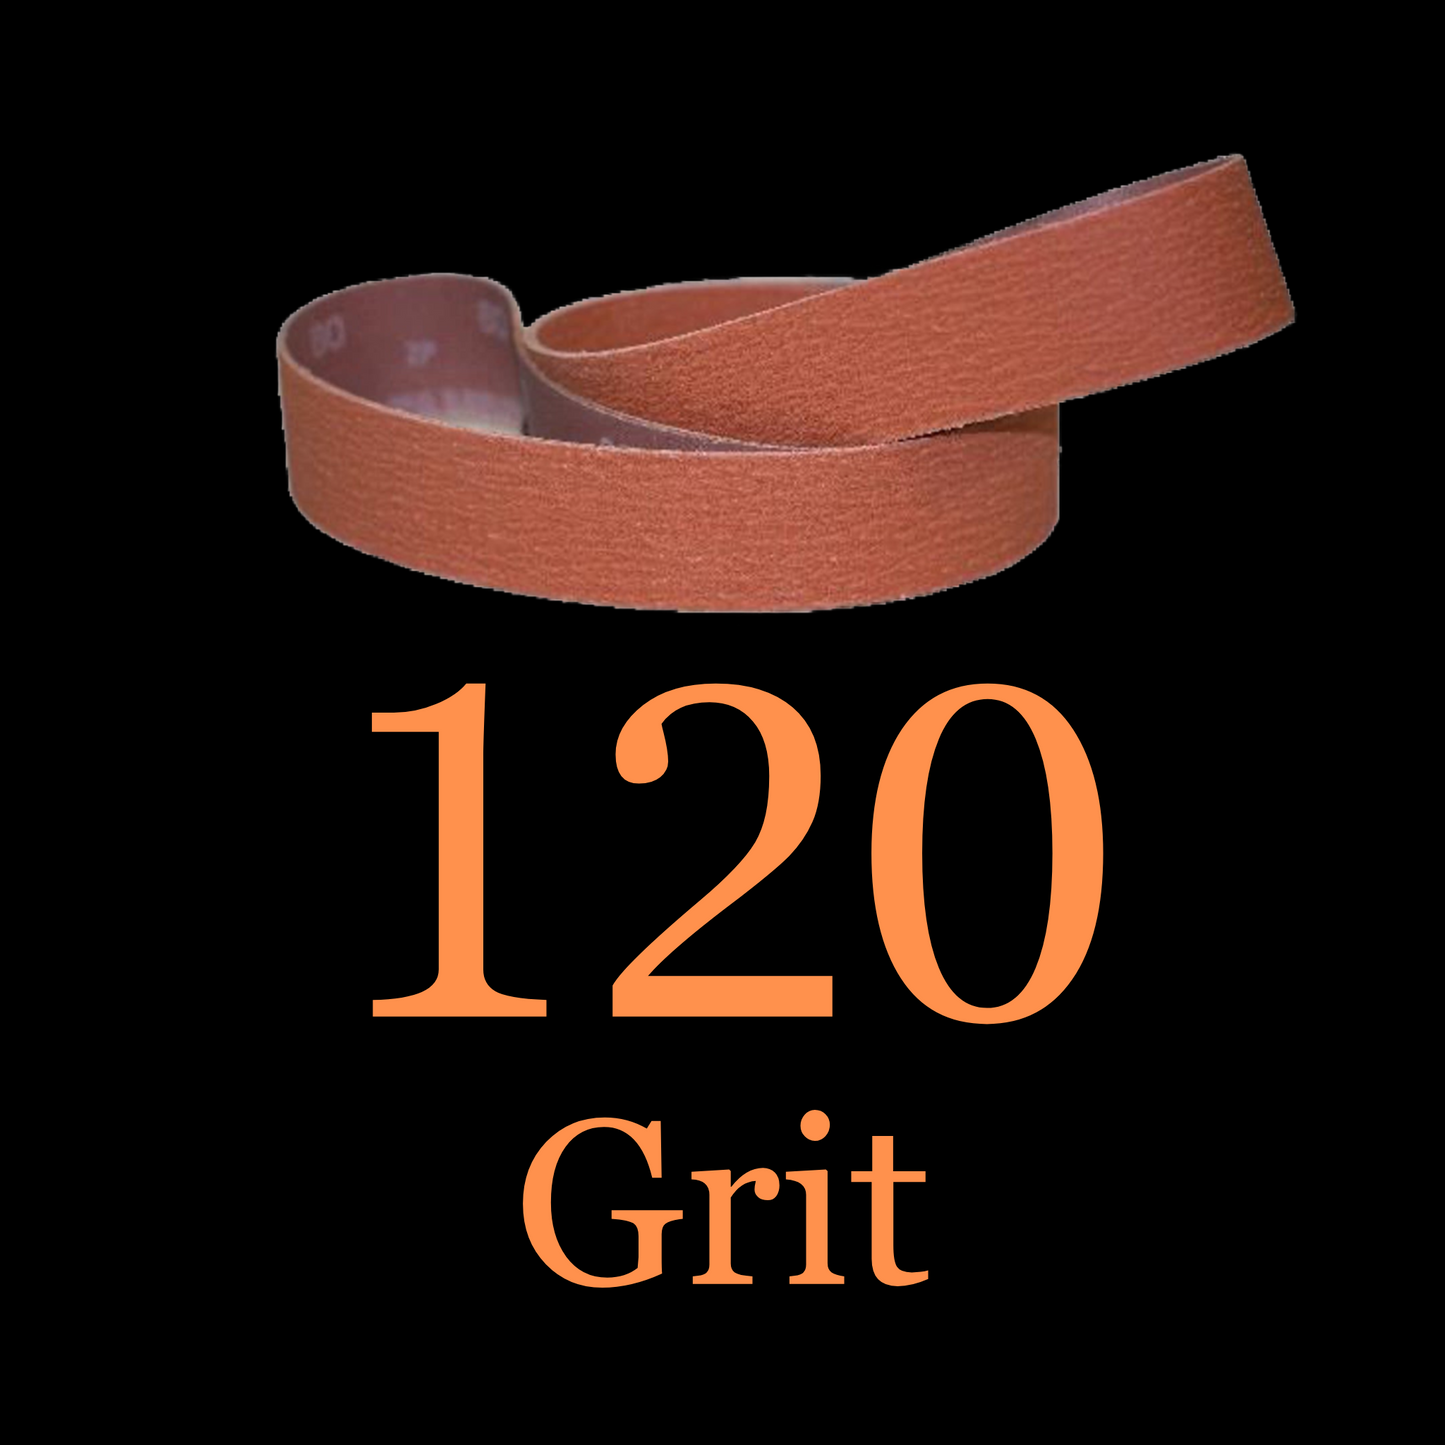 2” x 48” Blaze Ceramic Belt 120 Grit